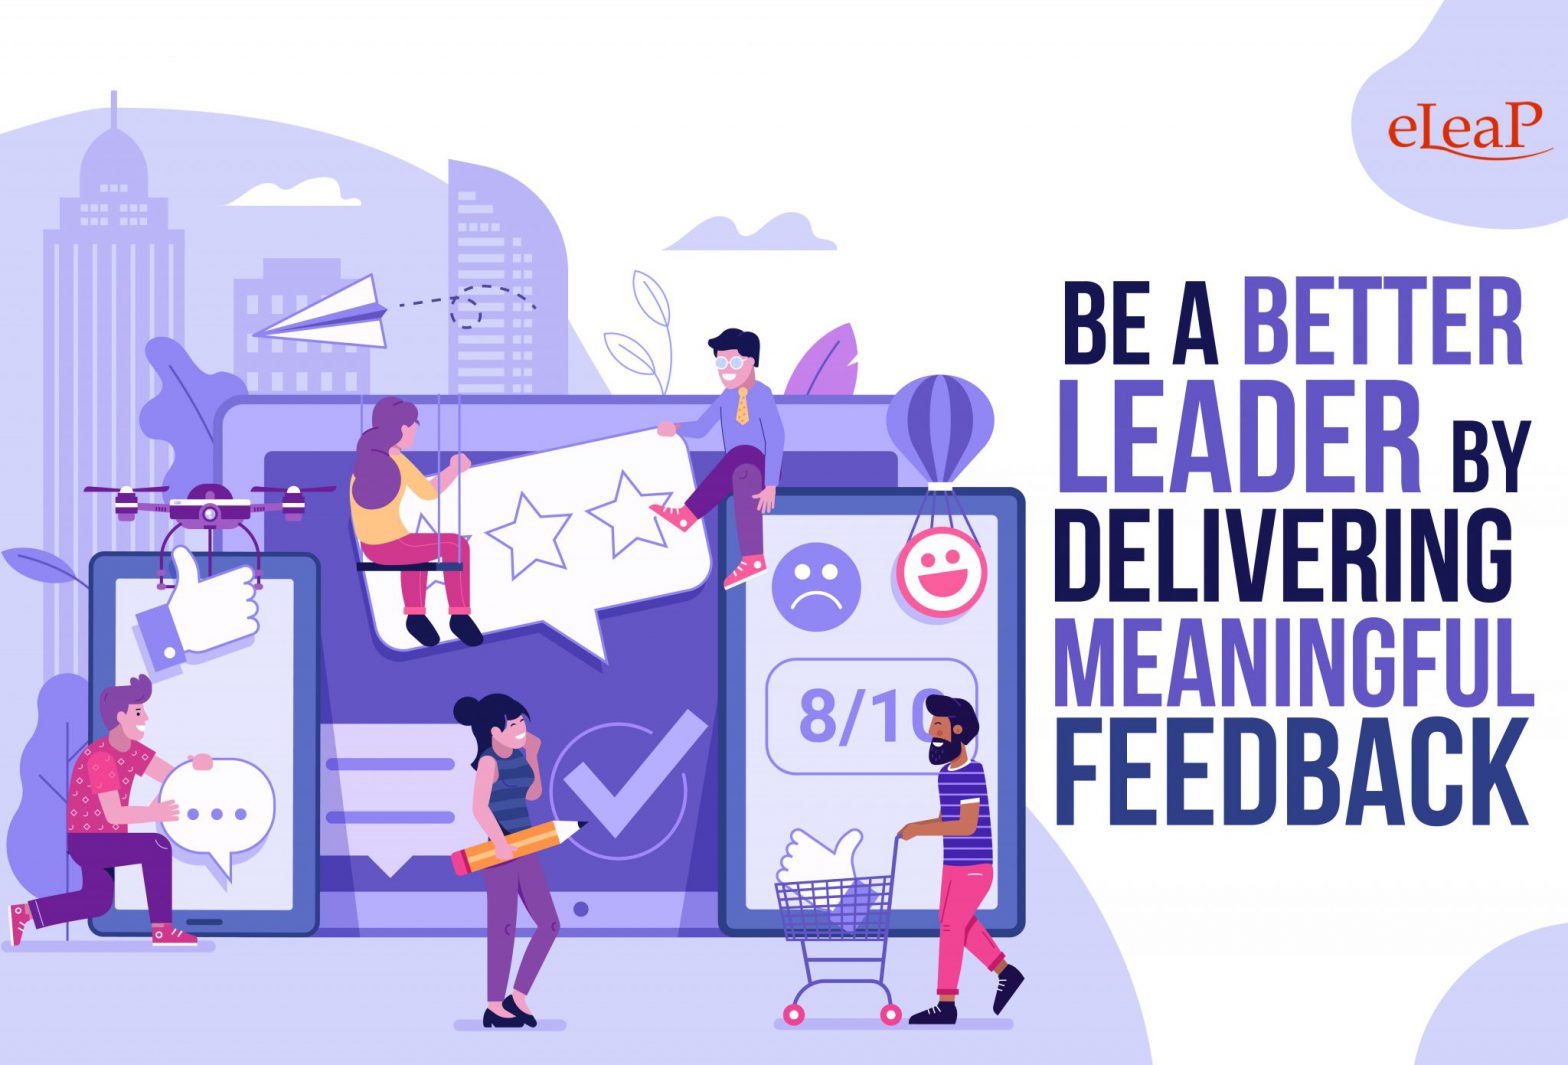 Leadership Development 101: What qualities make a good leader?